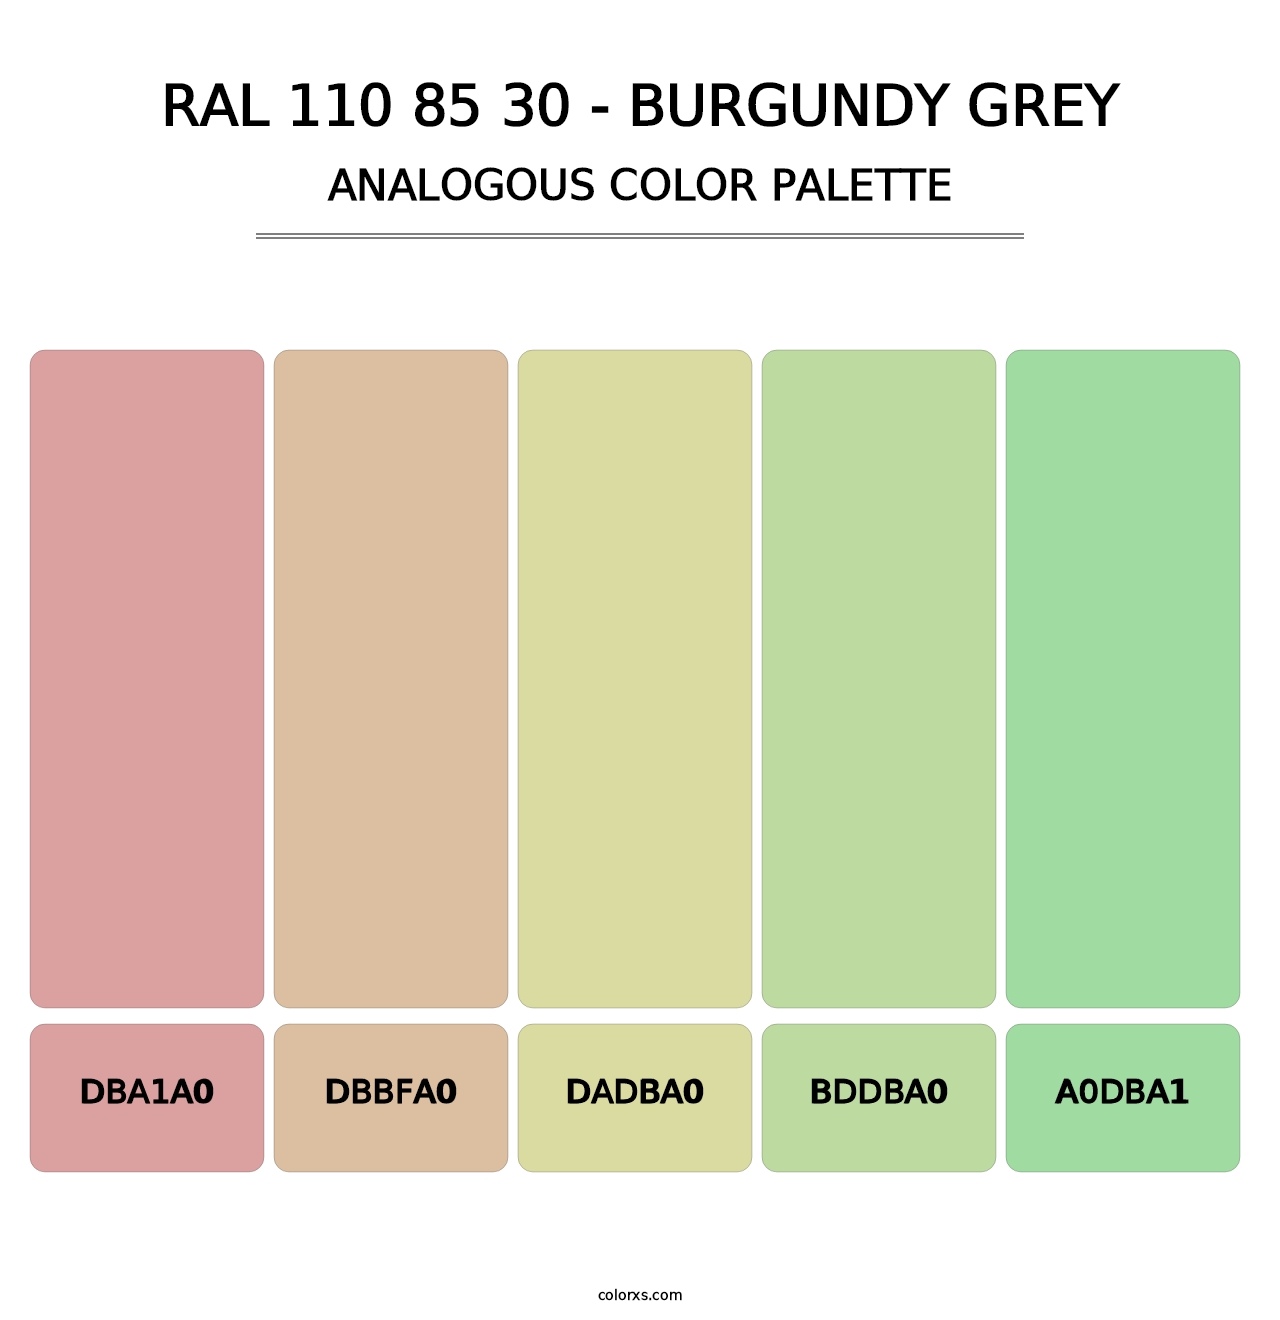 RAL 110 85 30 - Burgundy Grey - Analogous Color Palette